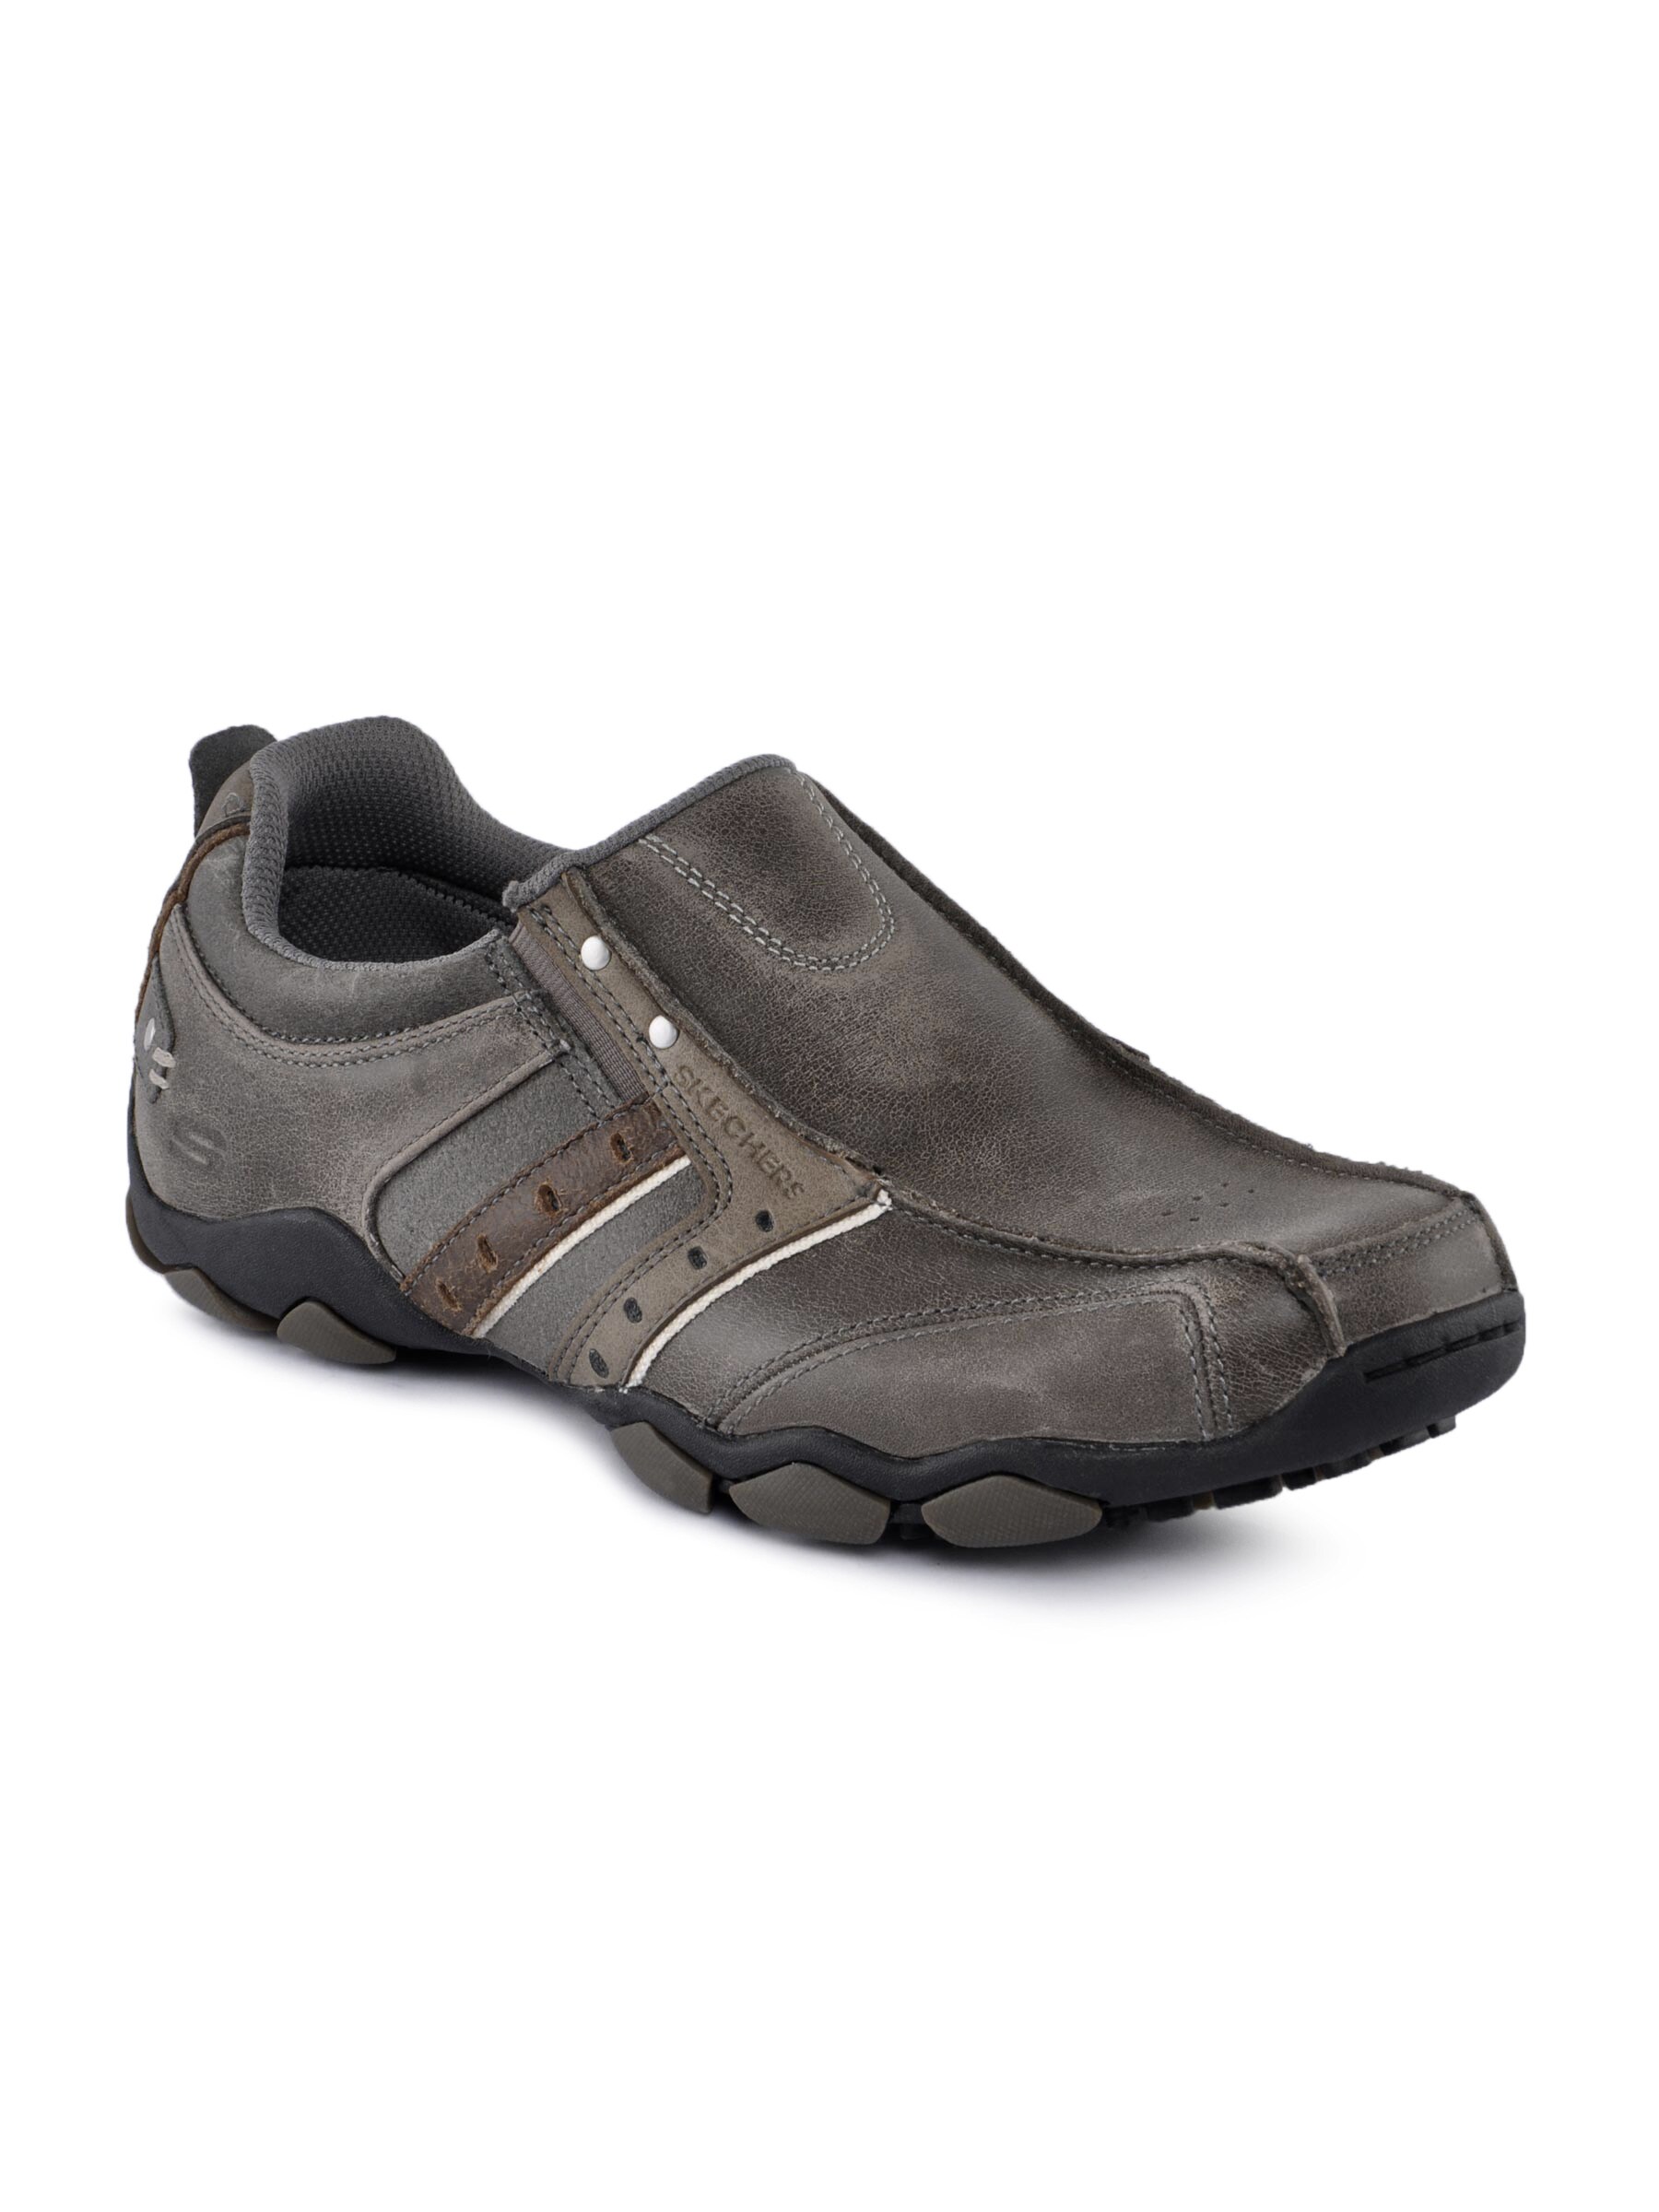 Skechers Men Heisman Charcoal Casual Shoes